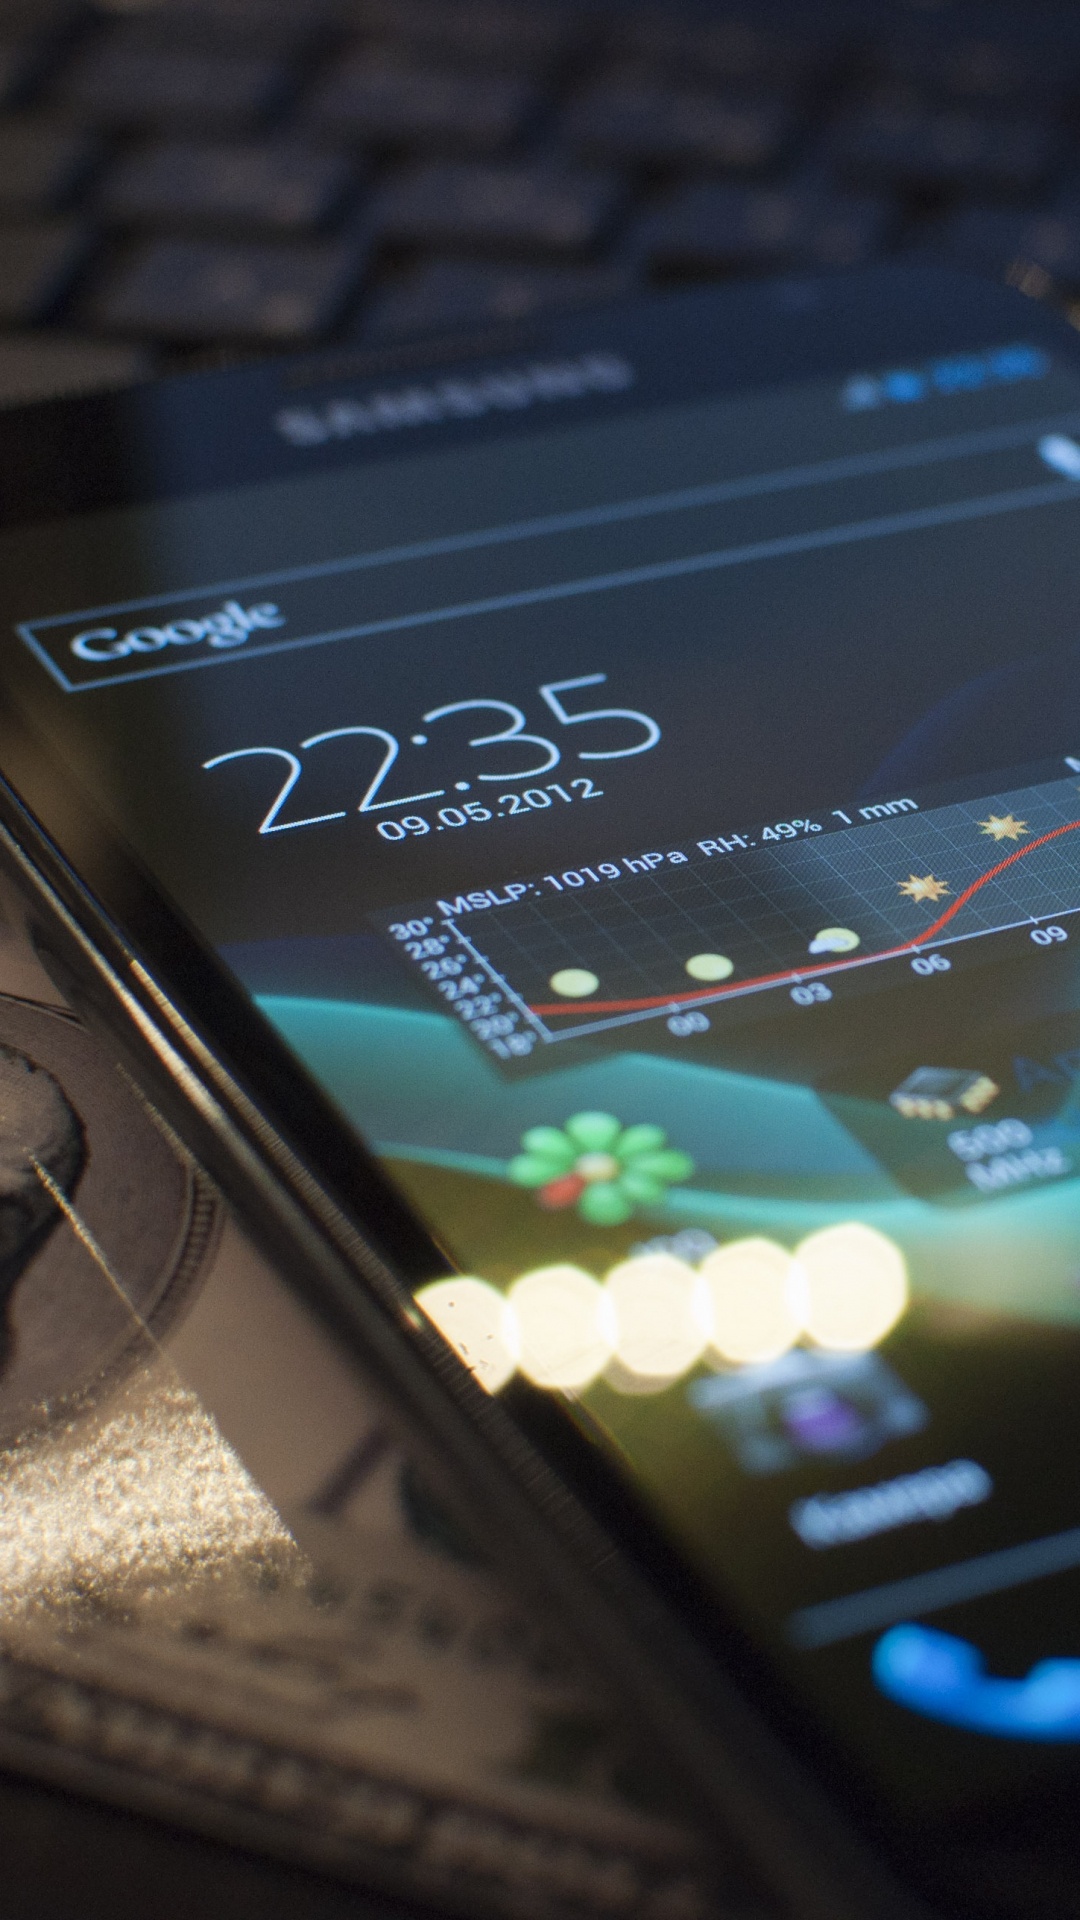 Samsung Negro Smartphone Android en Computadora Portátil Negra. Wallpaper in 1080x1920 Resolution